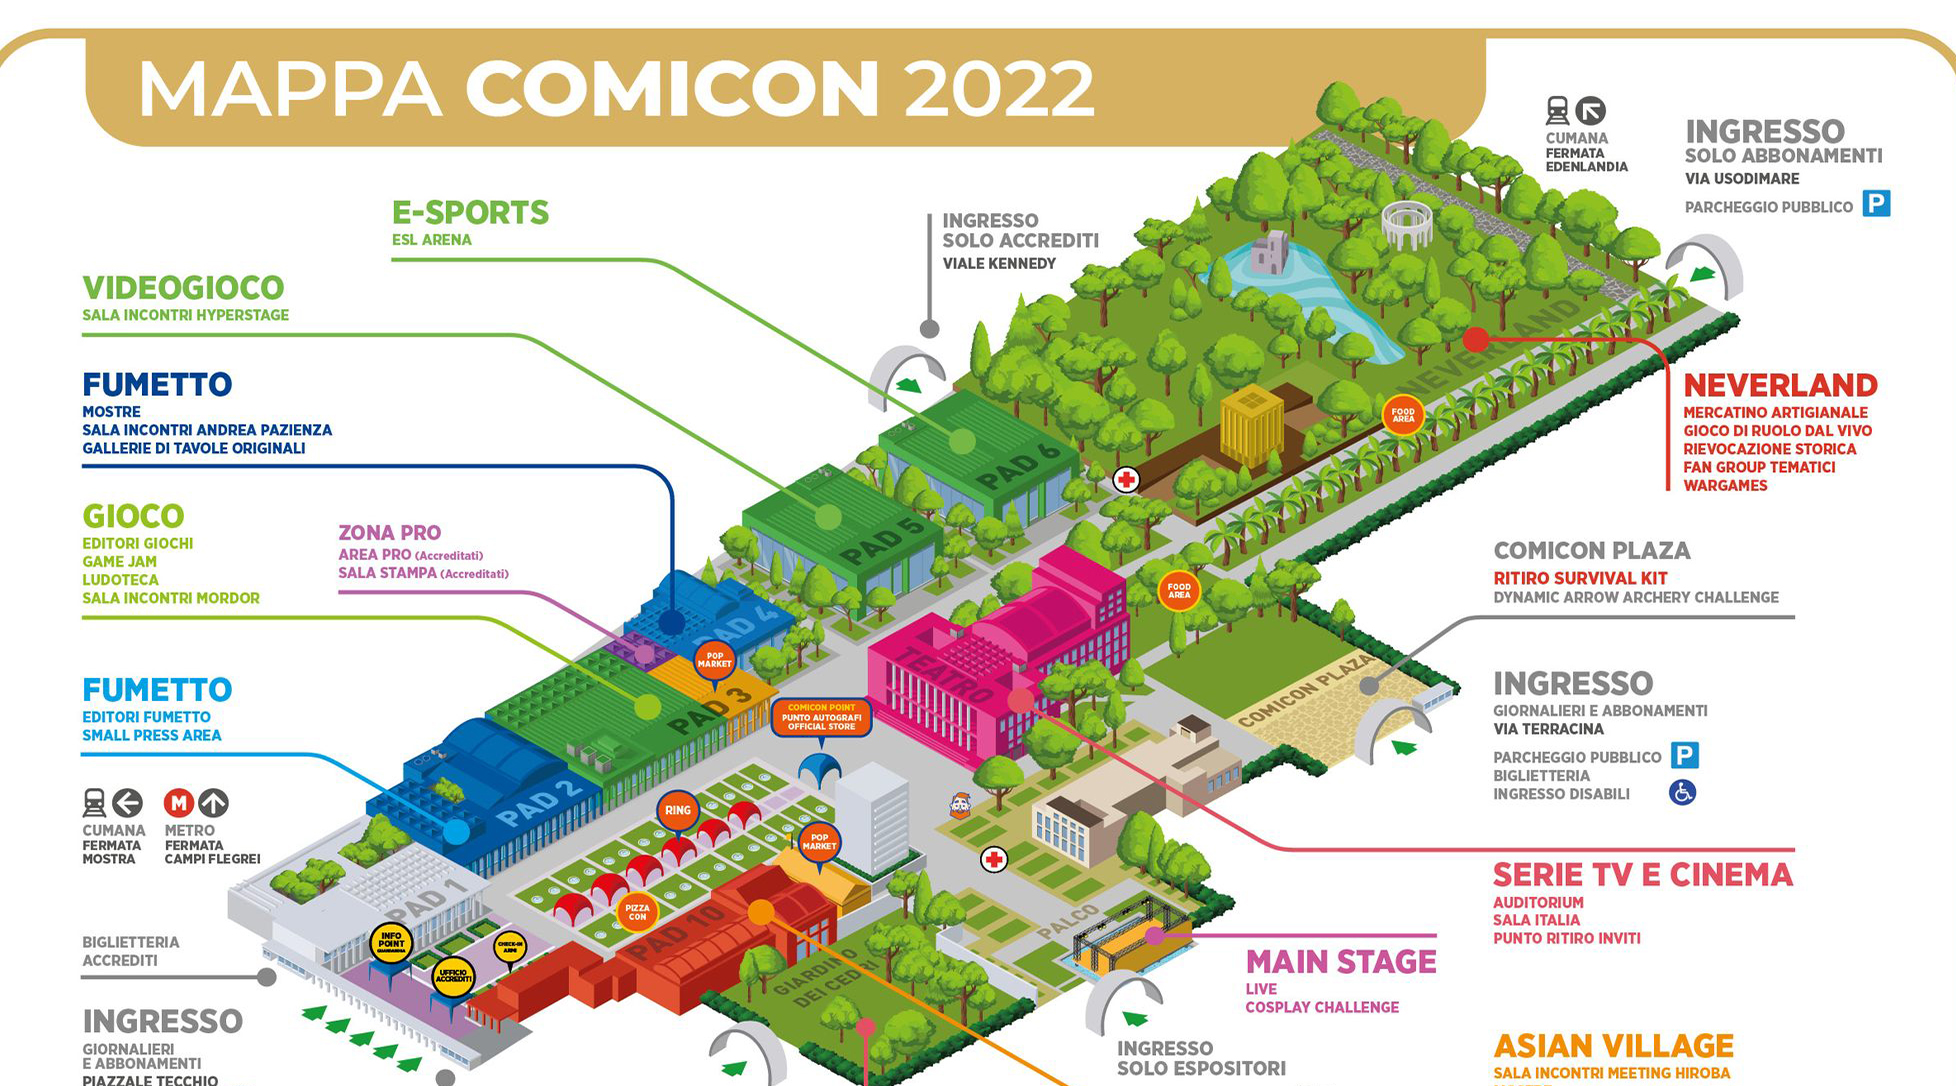 Mapa de Comicon 2022, reducido